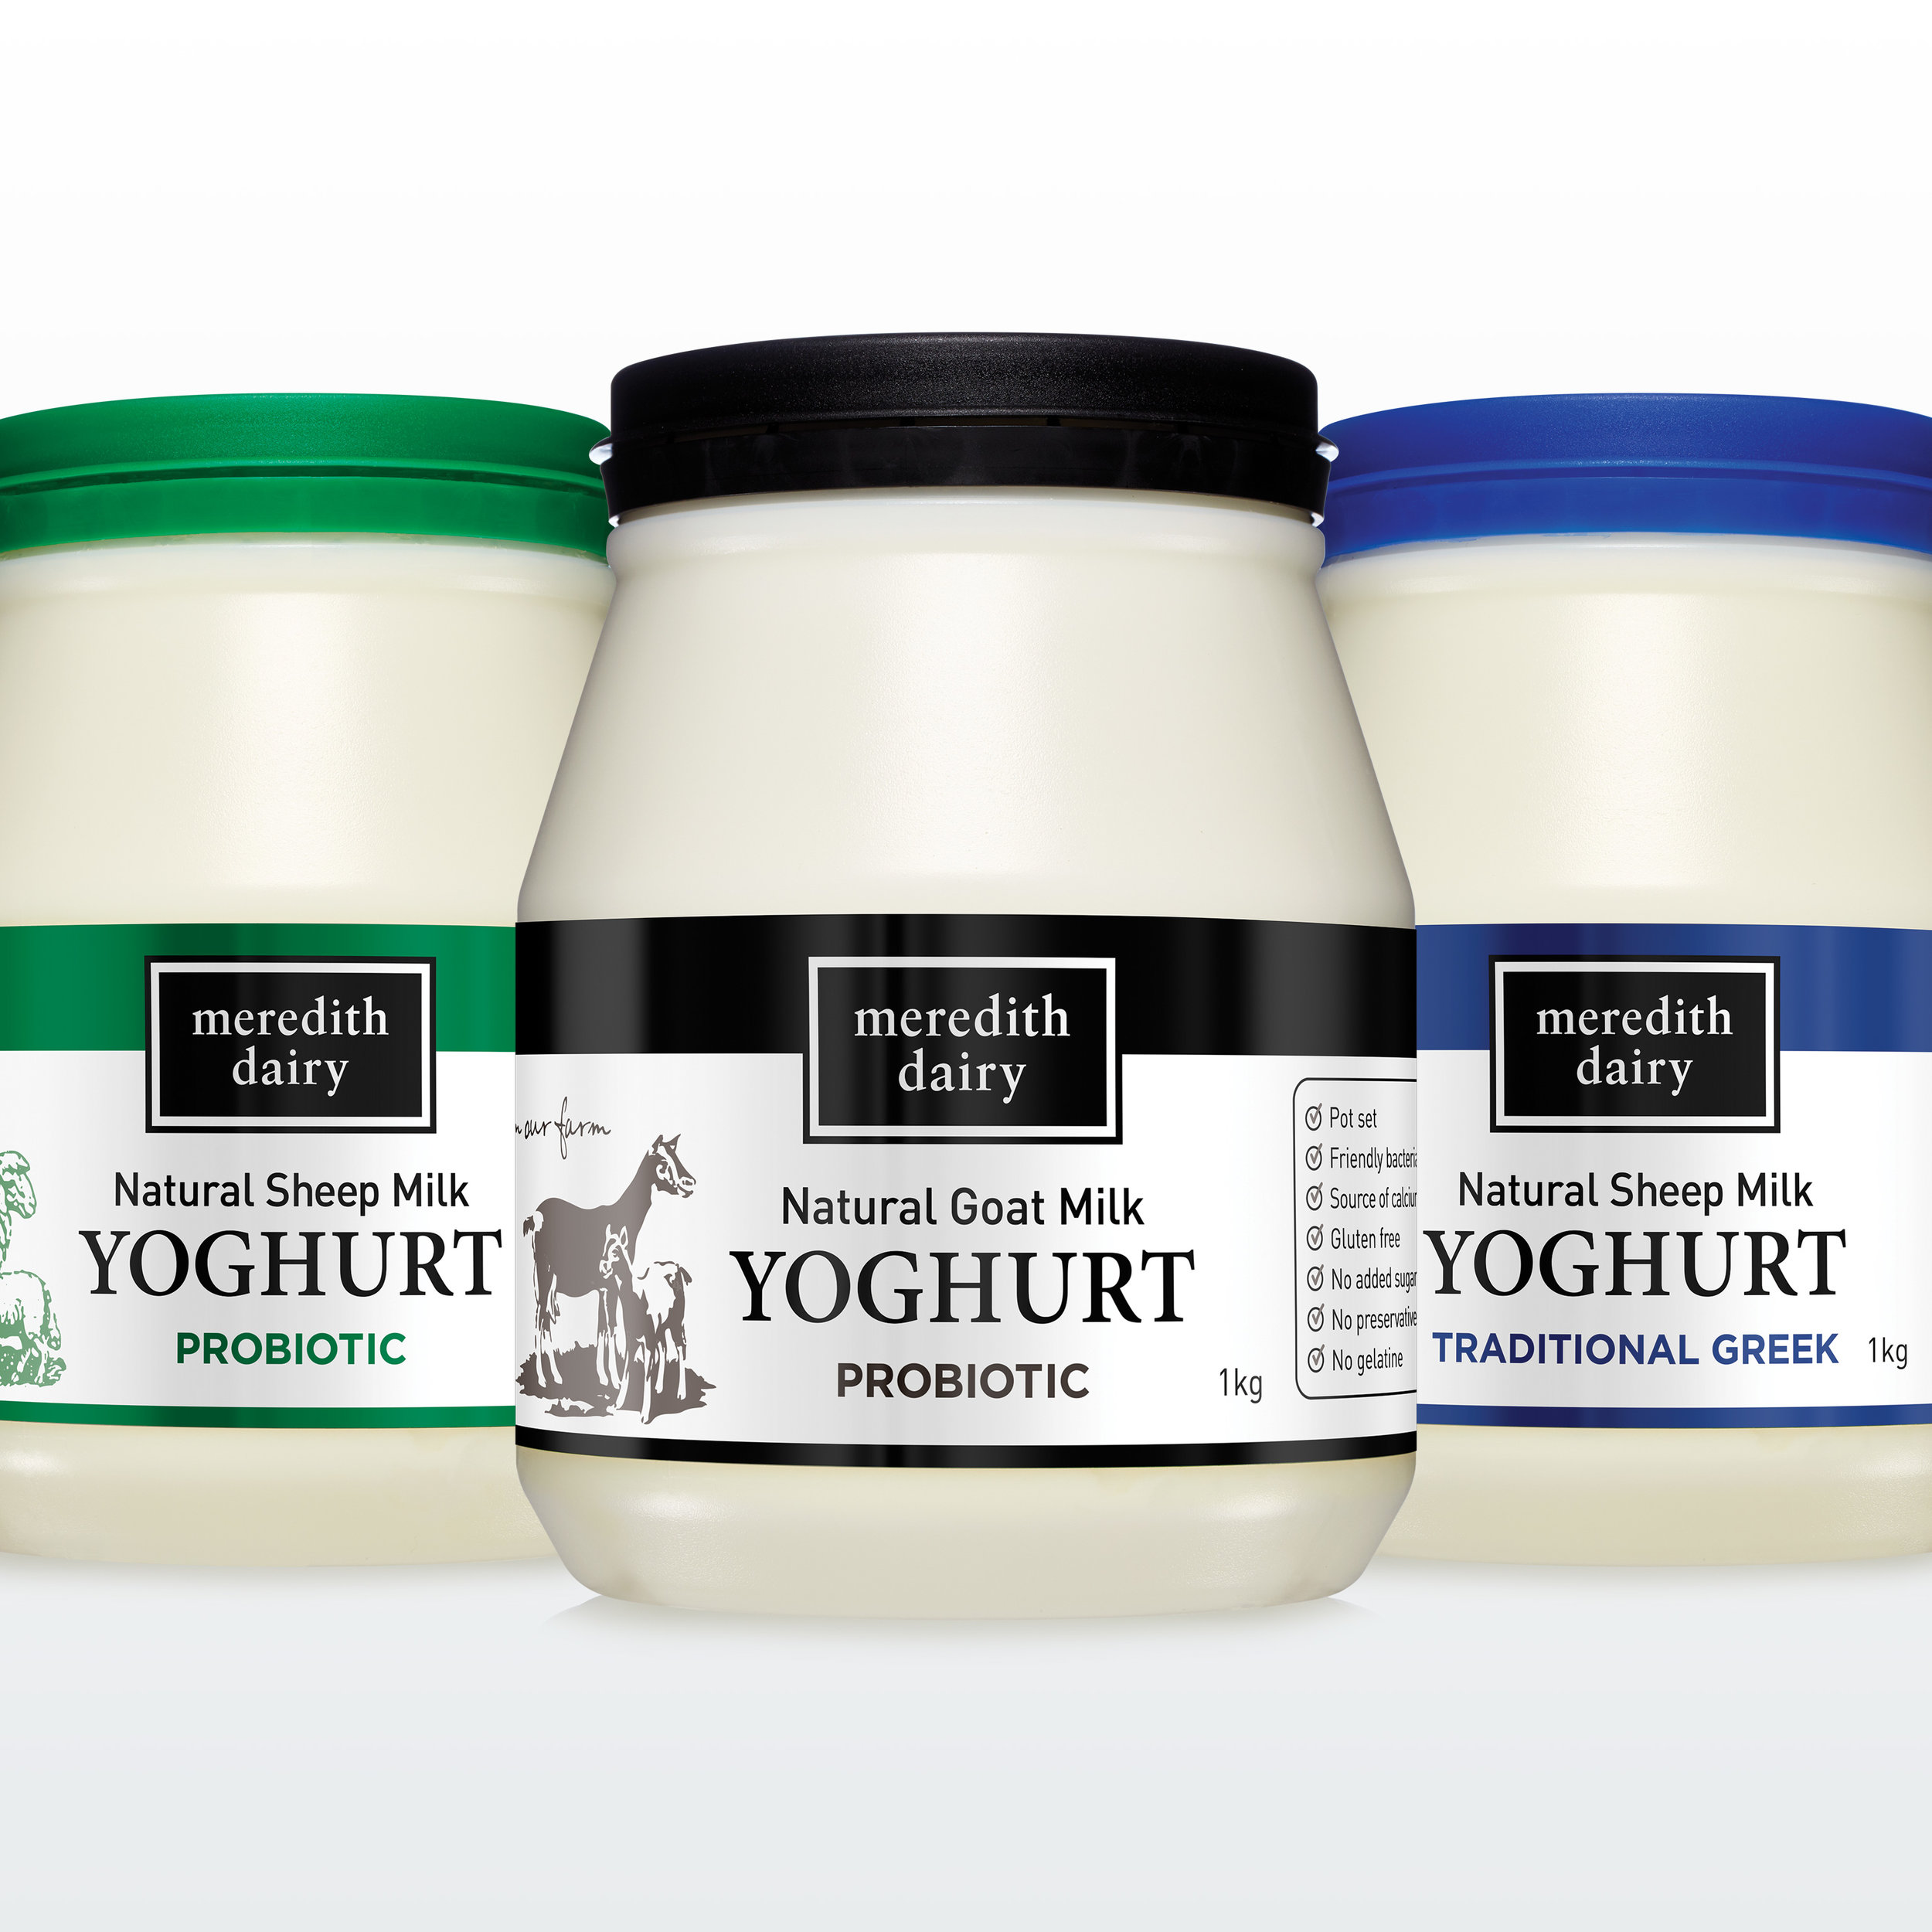 Meredith Dairy yoghurt